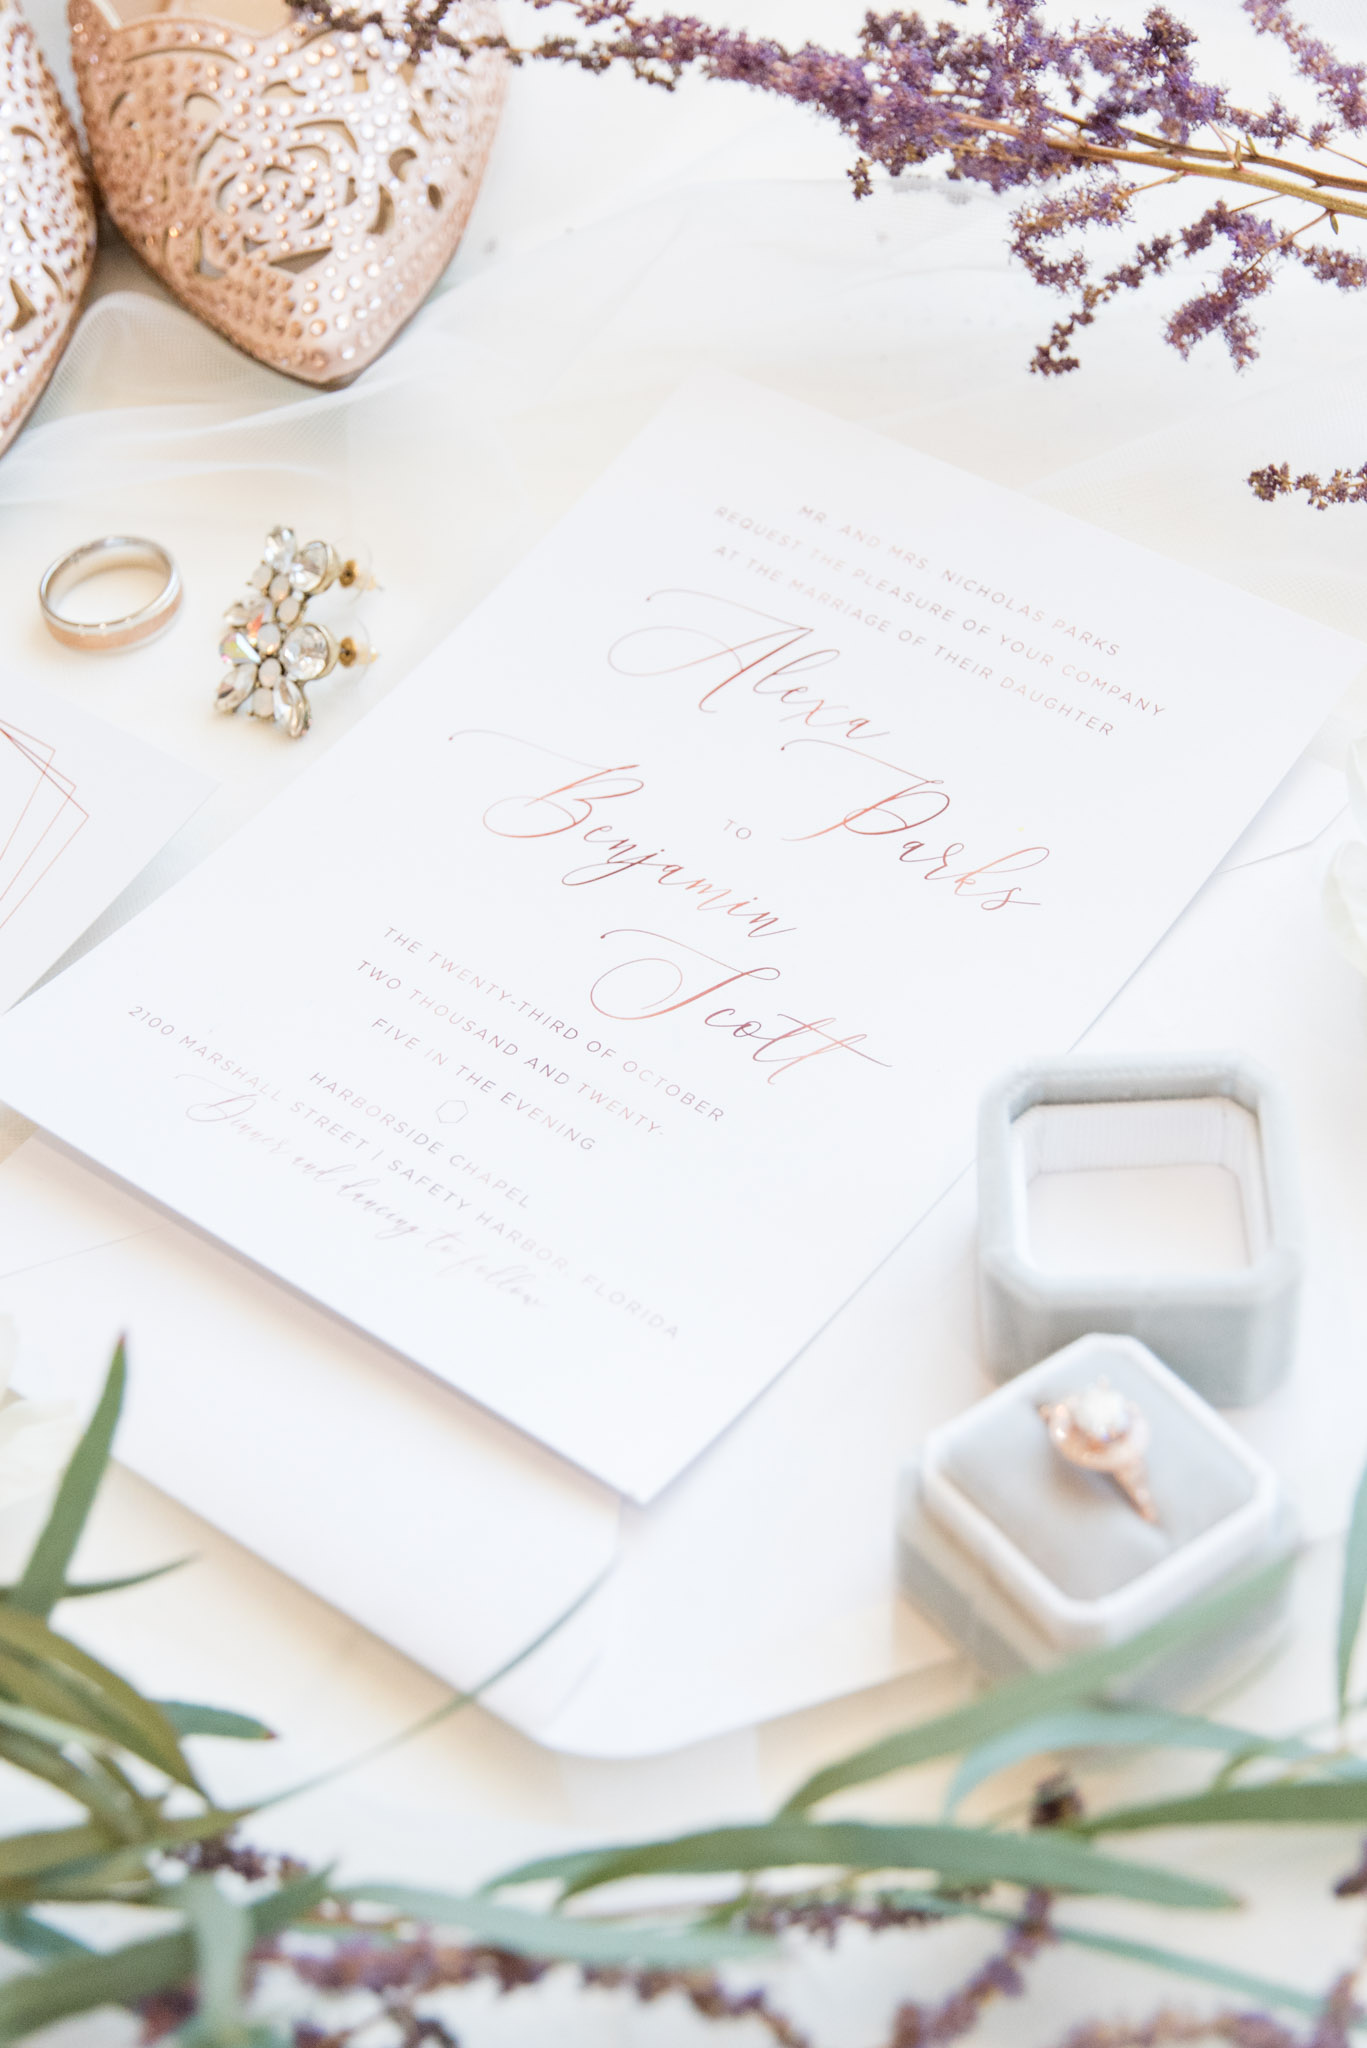 Wedding invitations with lavender.